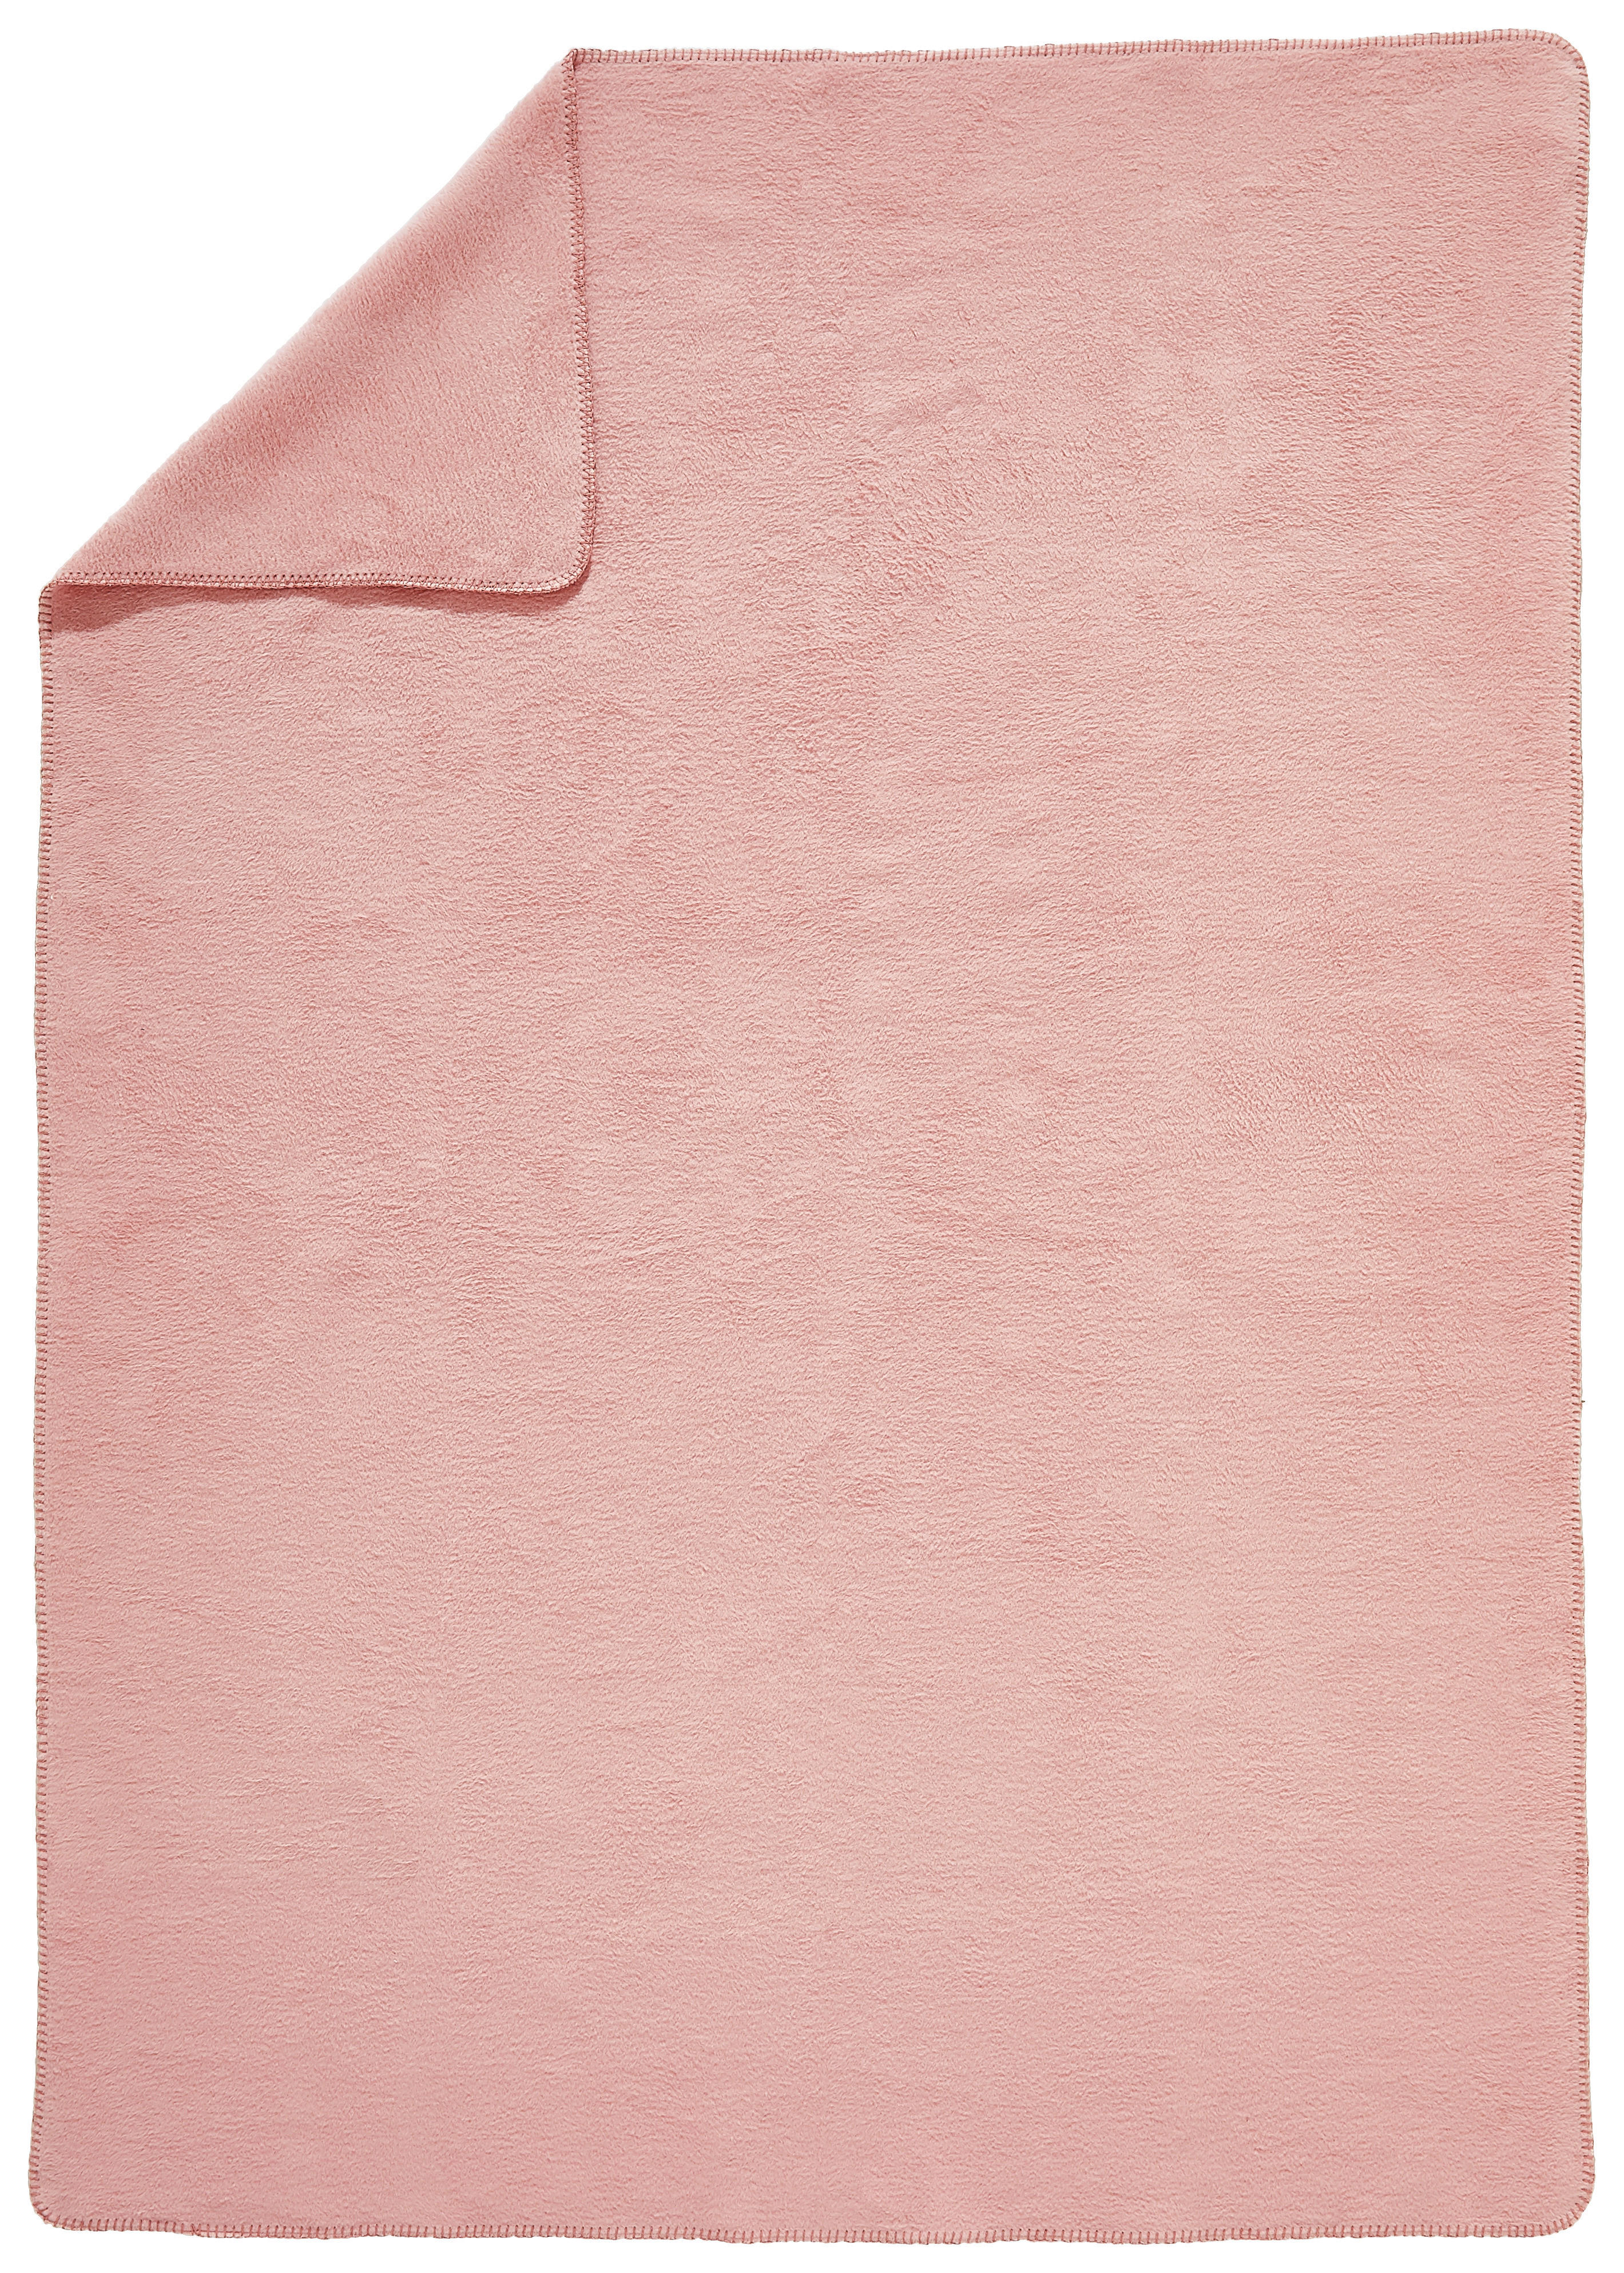 WOHNDECKE 150/200 cm  - Rosa, Basics, Textil (150/200cm) - Bio:Vio